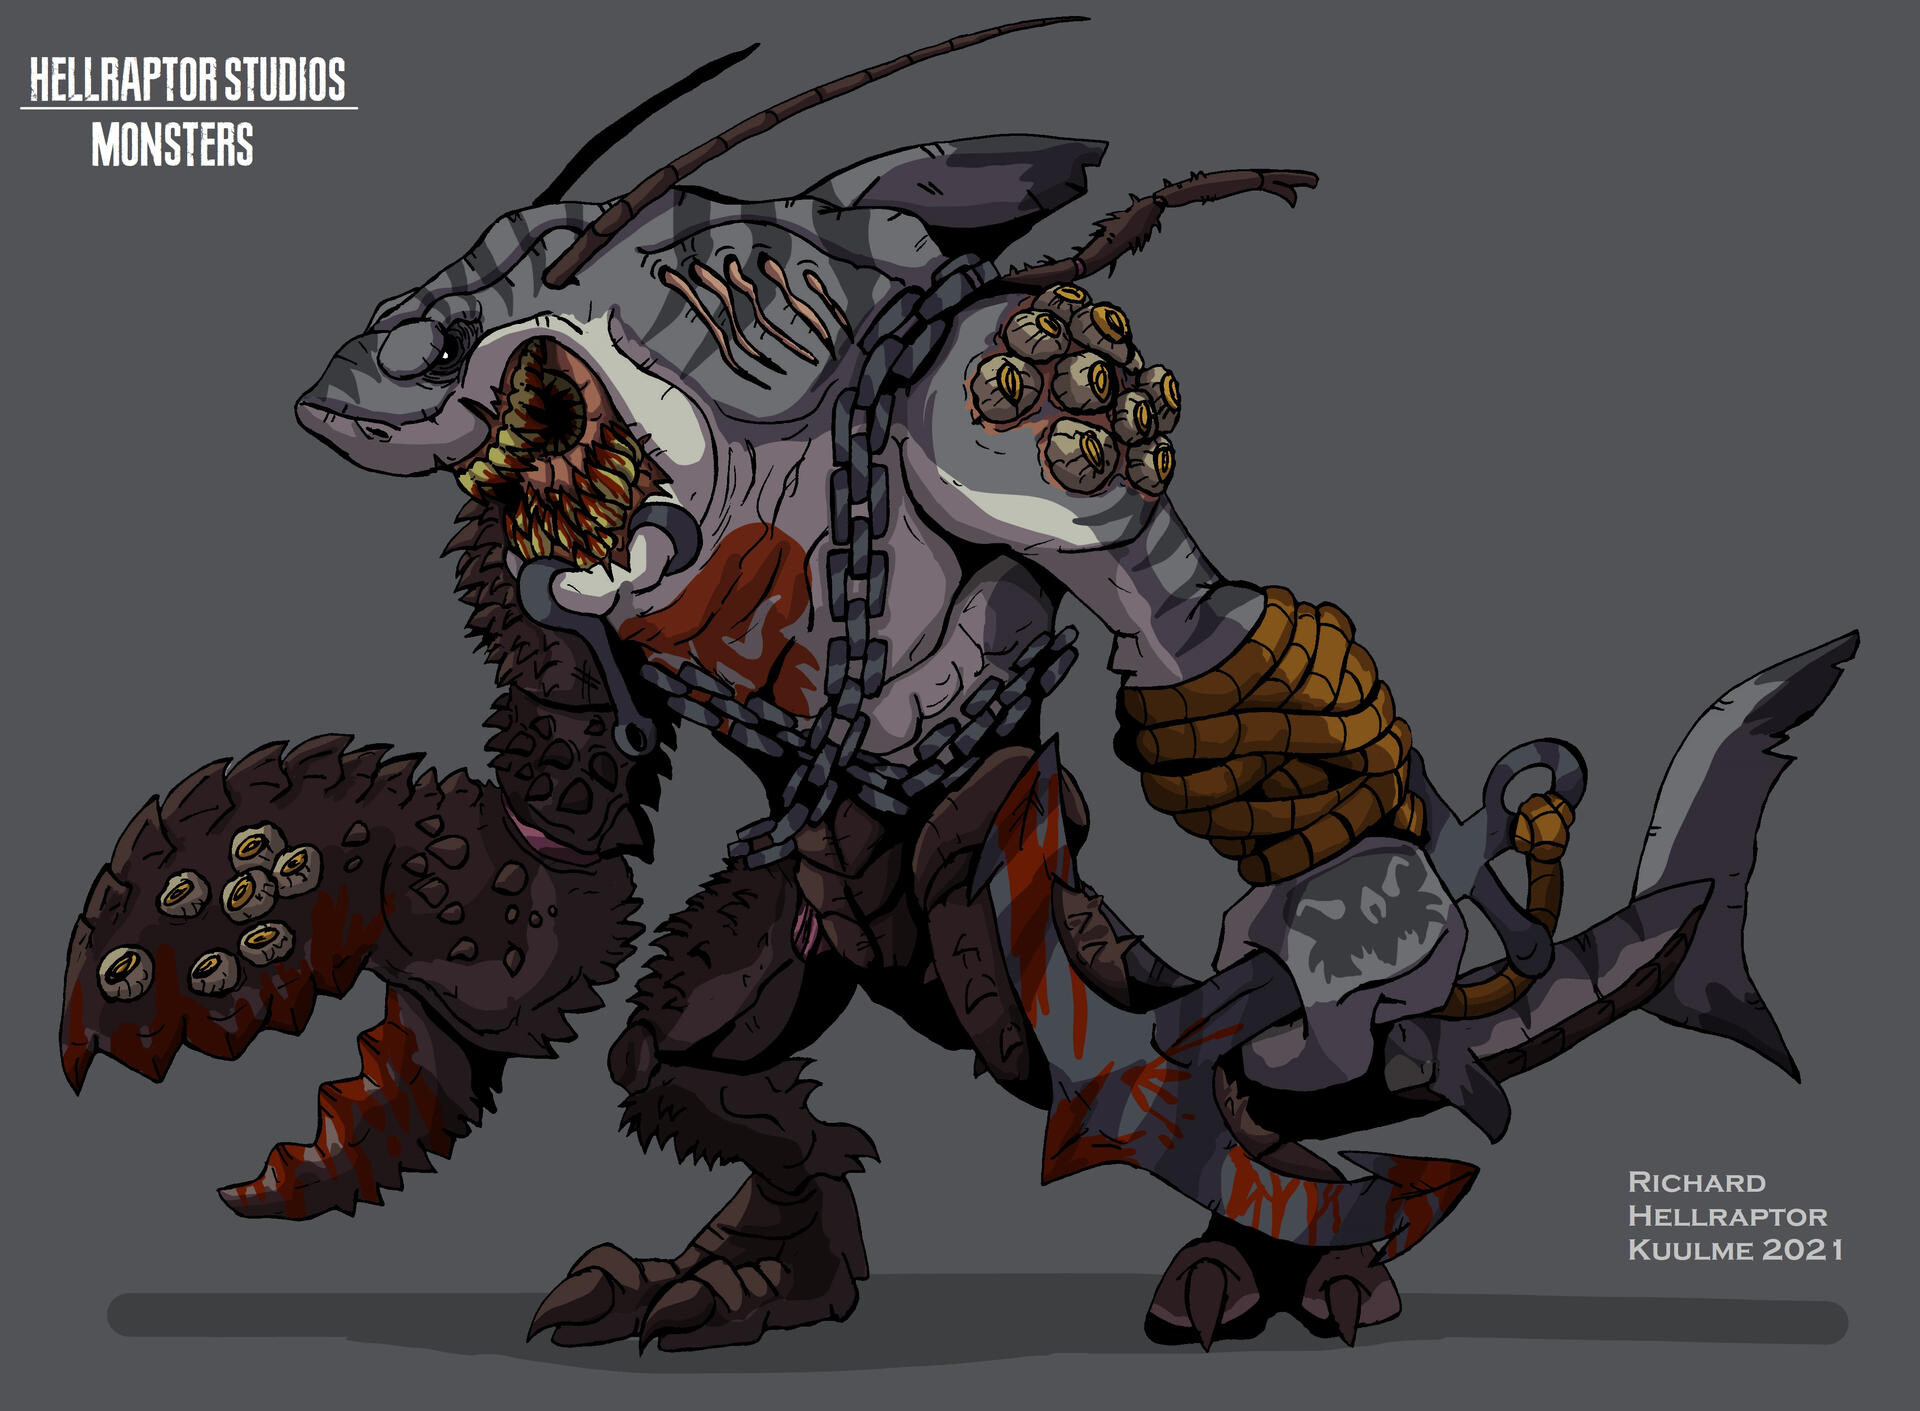 Mokele/ Mbembe  Monster artwork, Kaiju art, Kaiju monsters